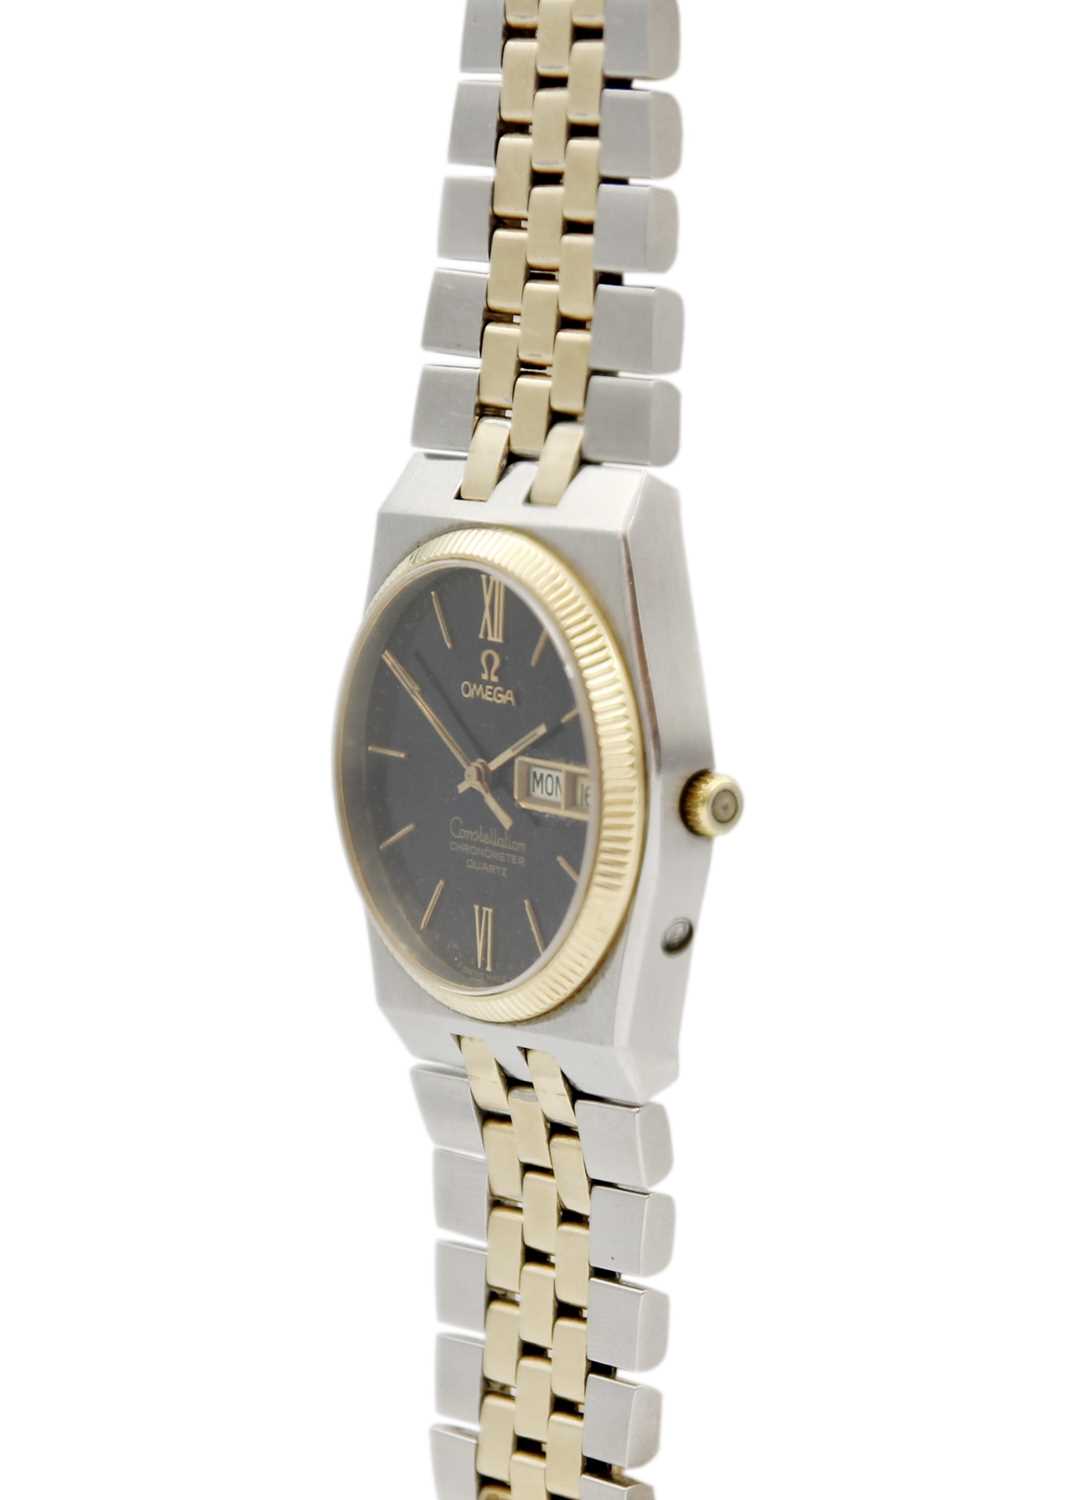 OMEGA - A Constellation bi-colour chronometer gentleman's quartz bracelet wristwatch. - Image 2 of 5